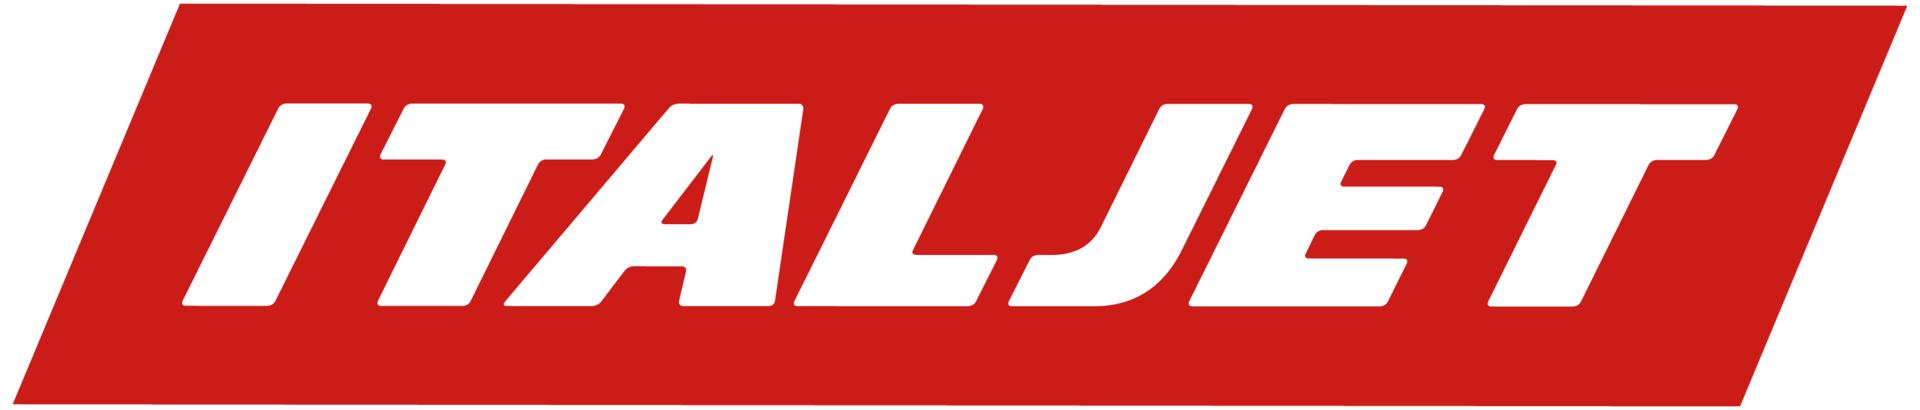 Italjet-logo